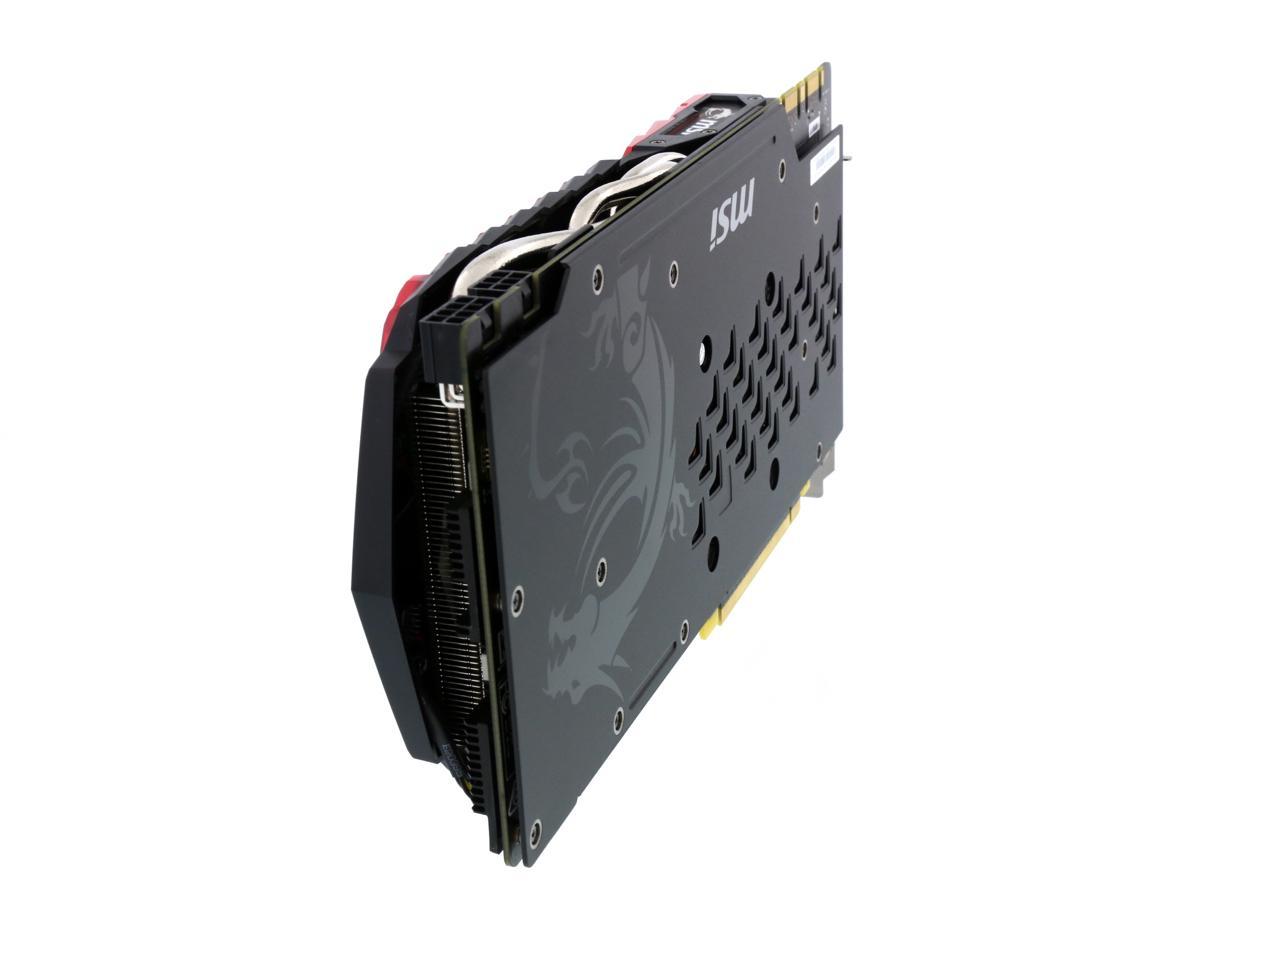 MSI GeForce GTX 1080 Video Card GTX 1080 GAMING 8G - Newegg.com